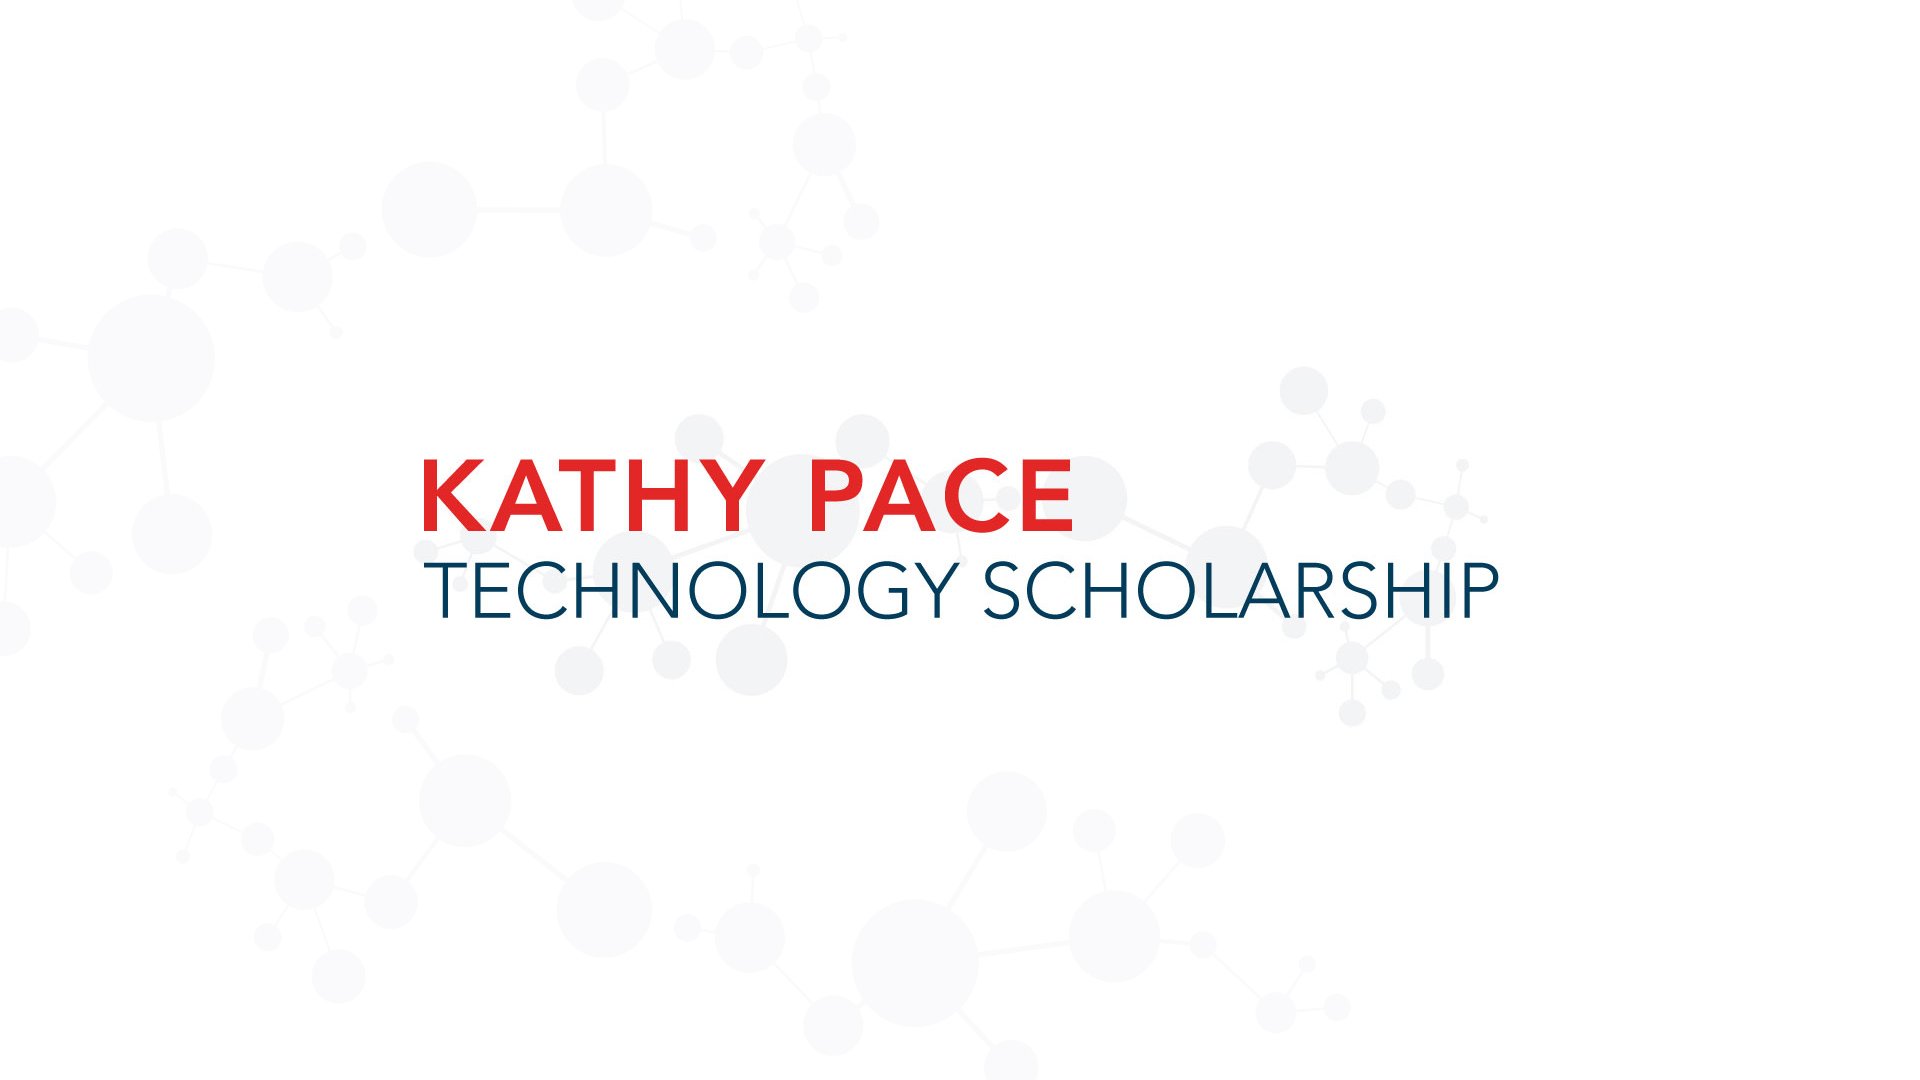 Kathy Pace Technology Scholarship